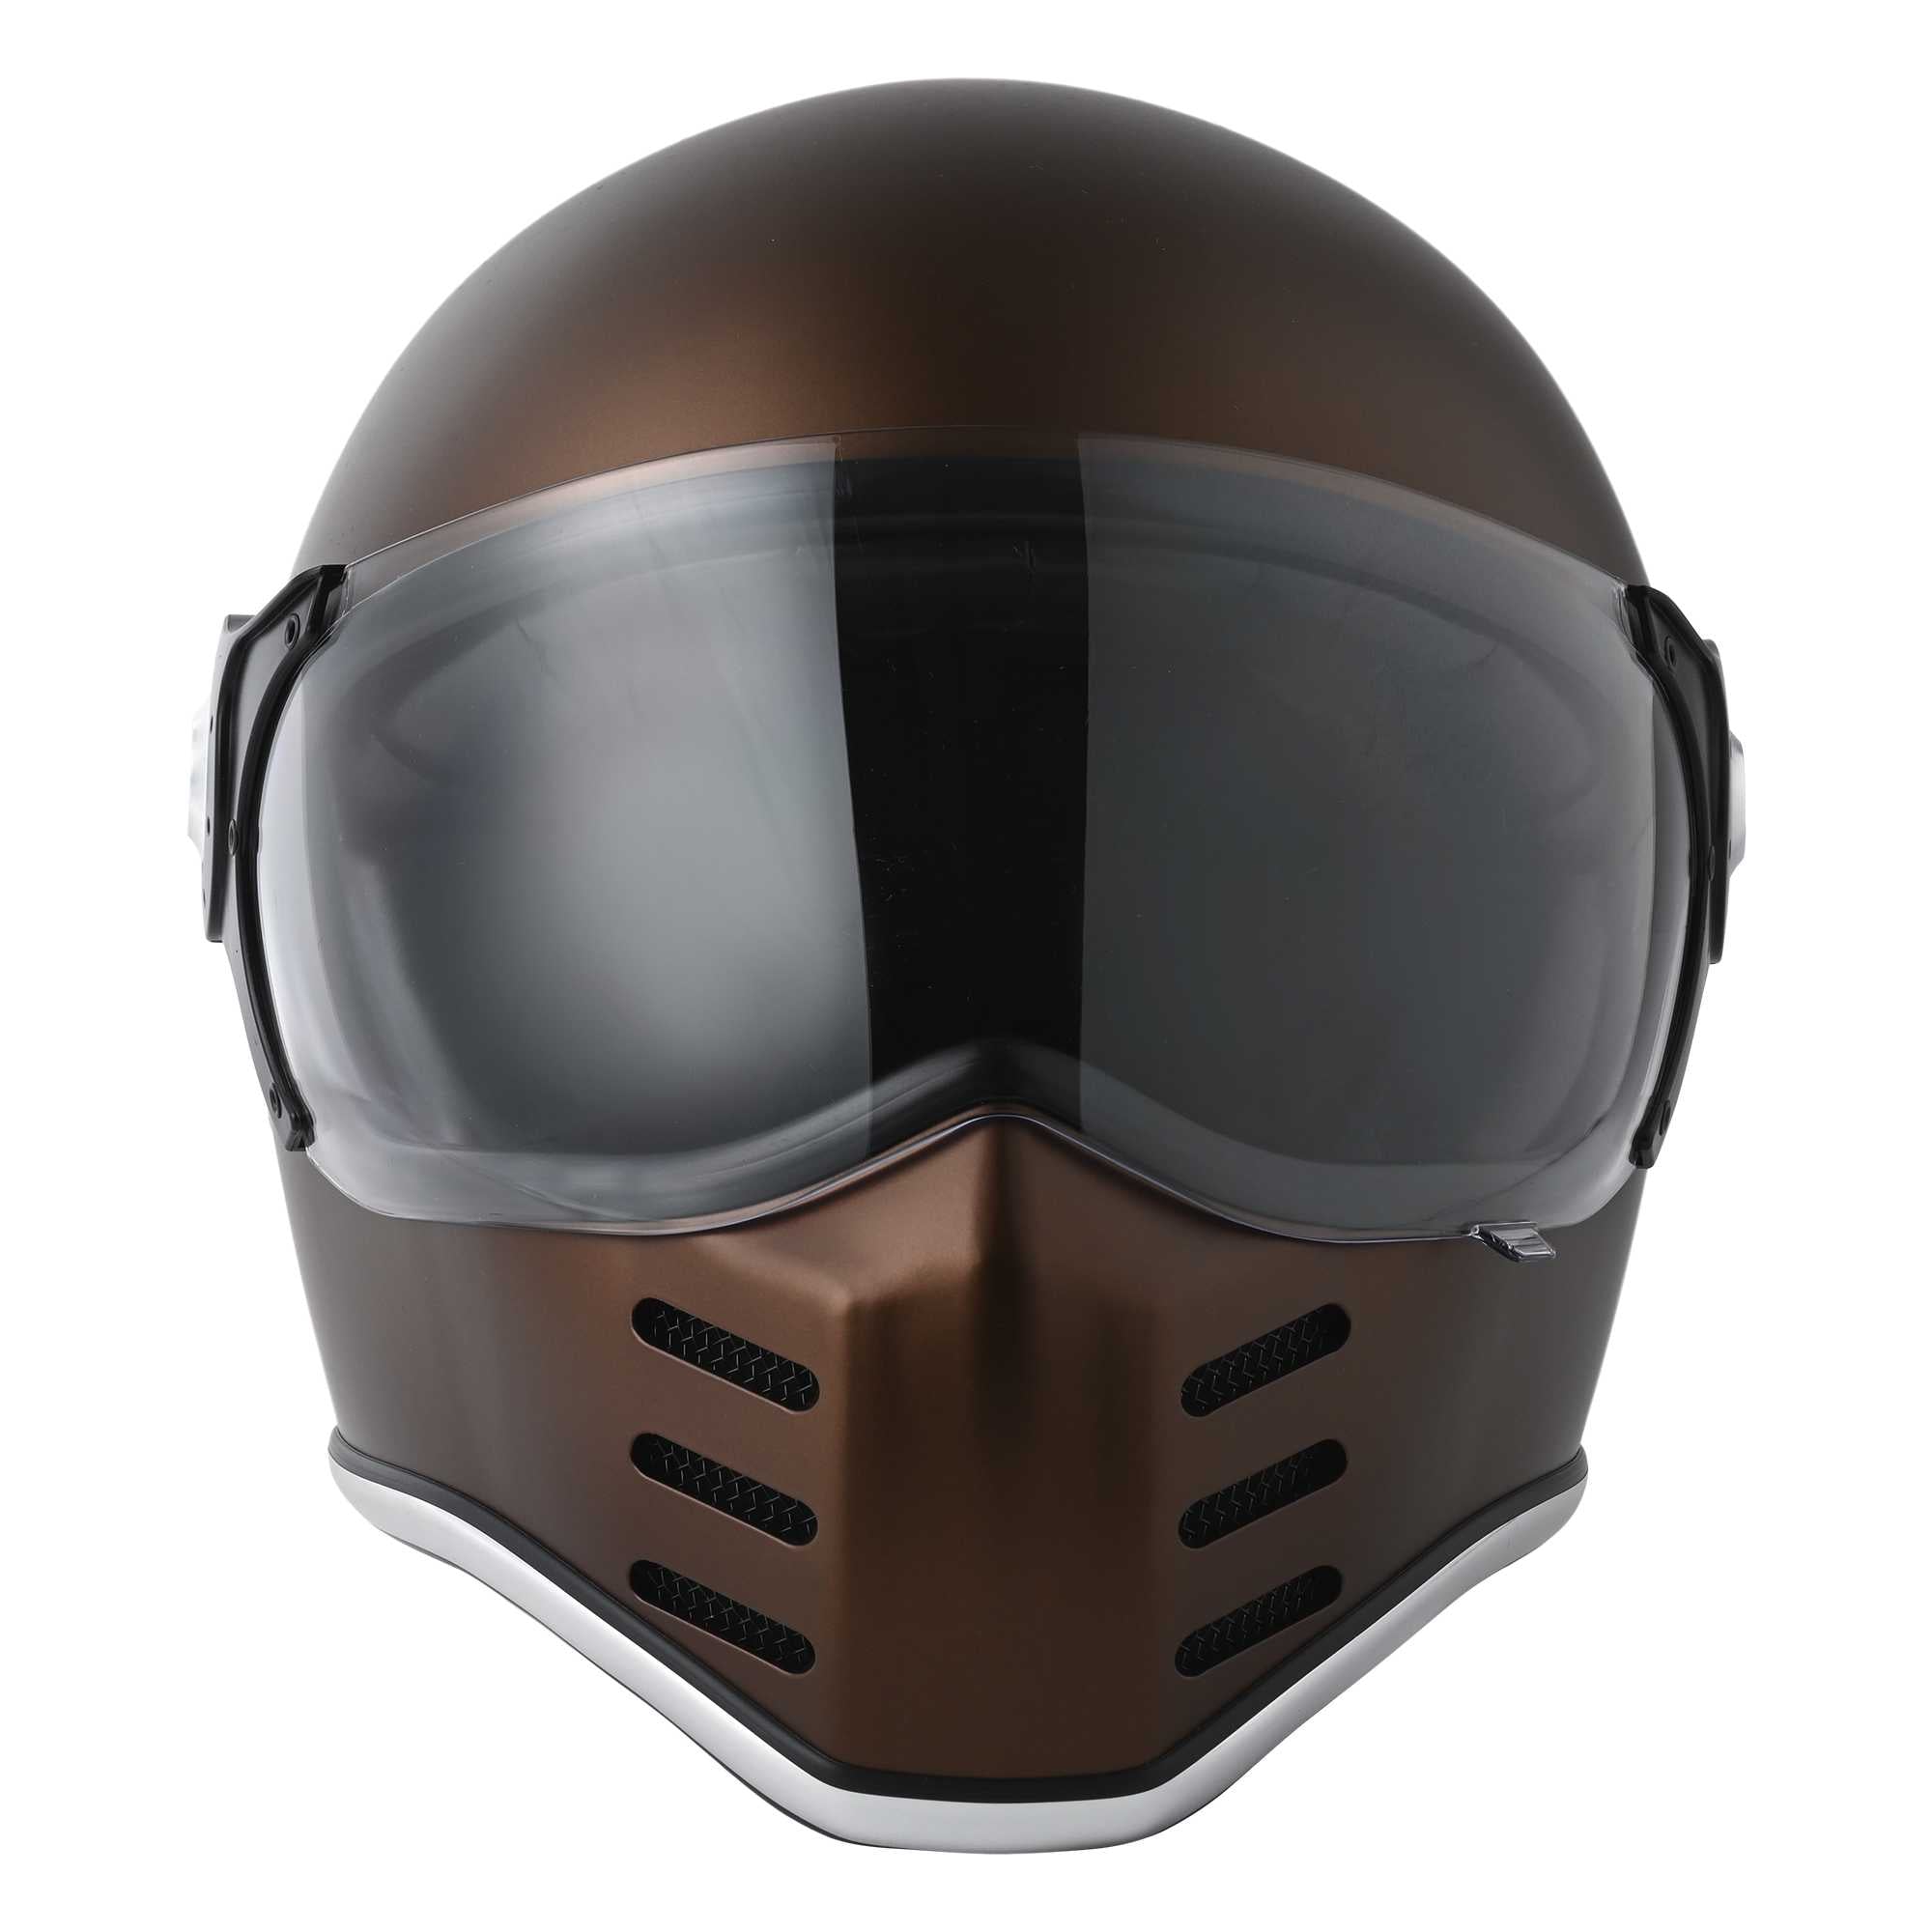 RIDEZ X HELMET 限量型号 MATT BROWN 全脸摩托车头盔